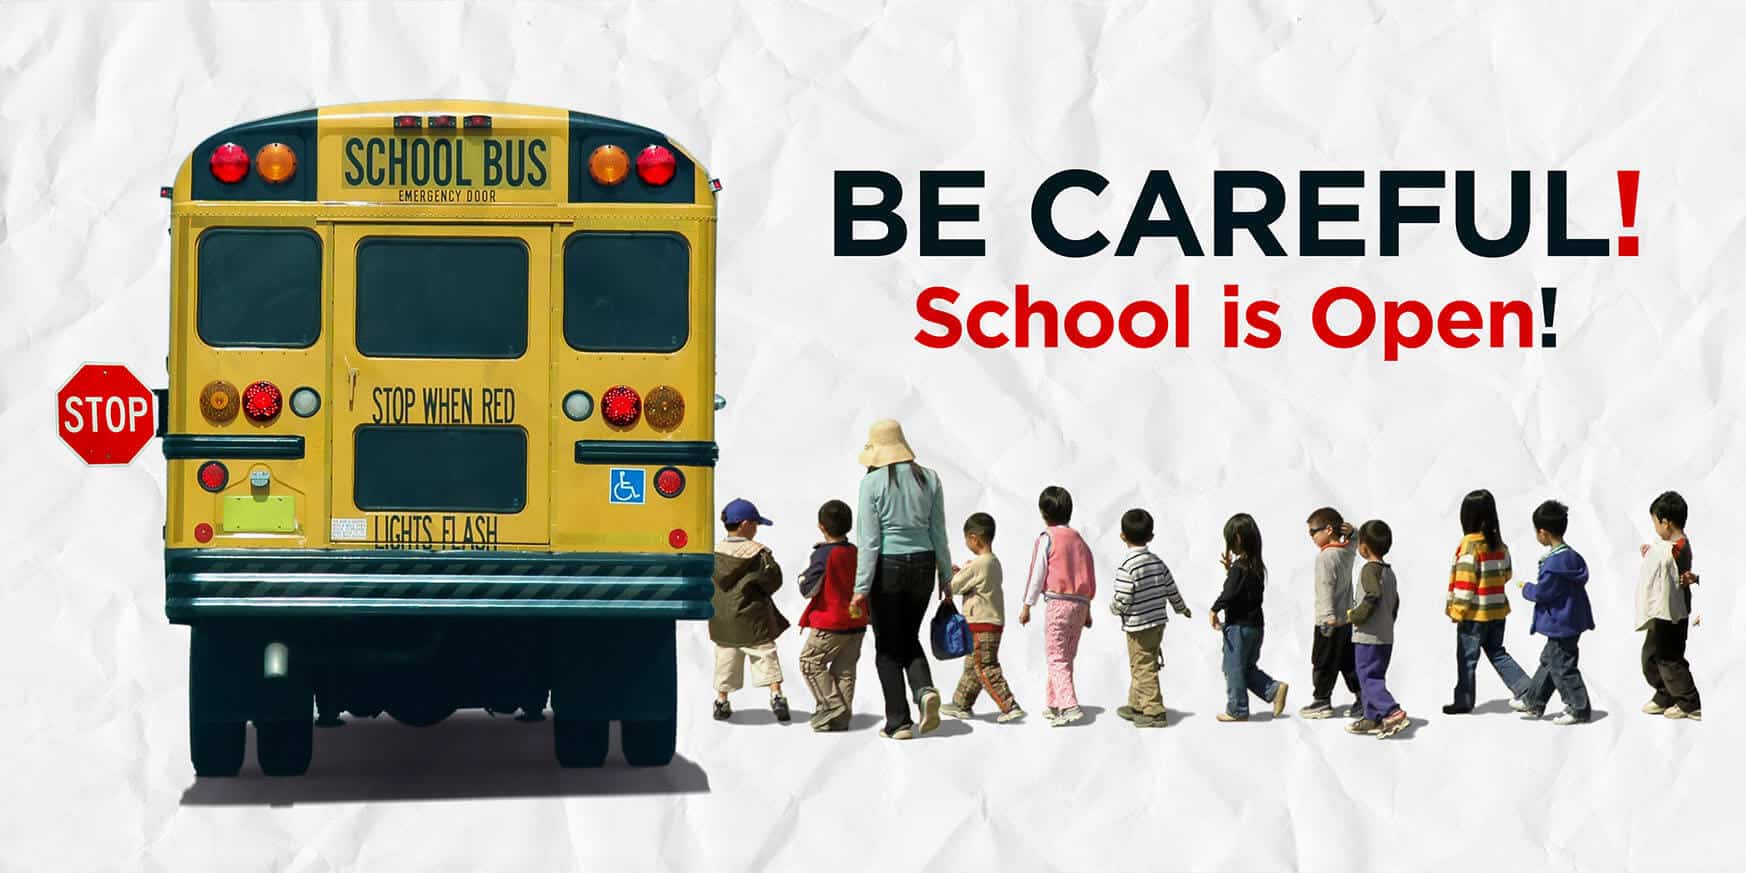 School Bus_Be Careful_Owen